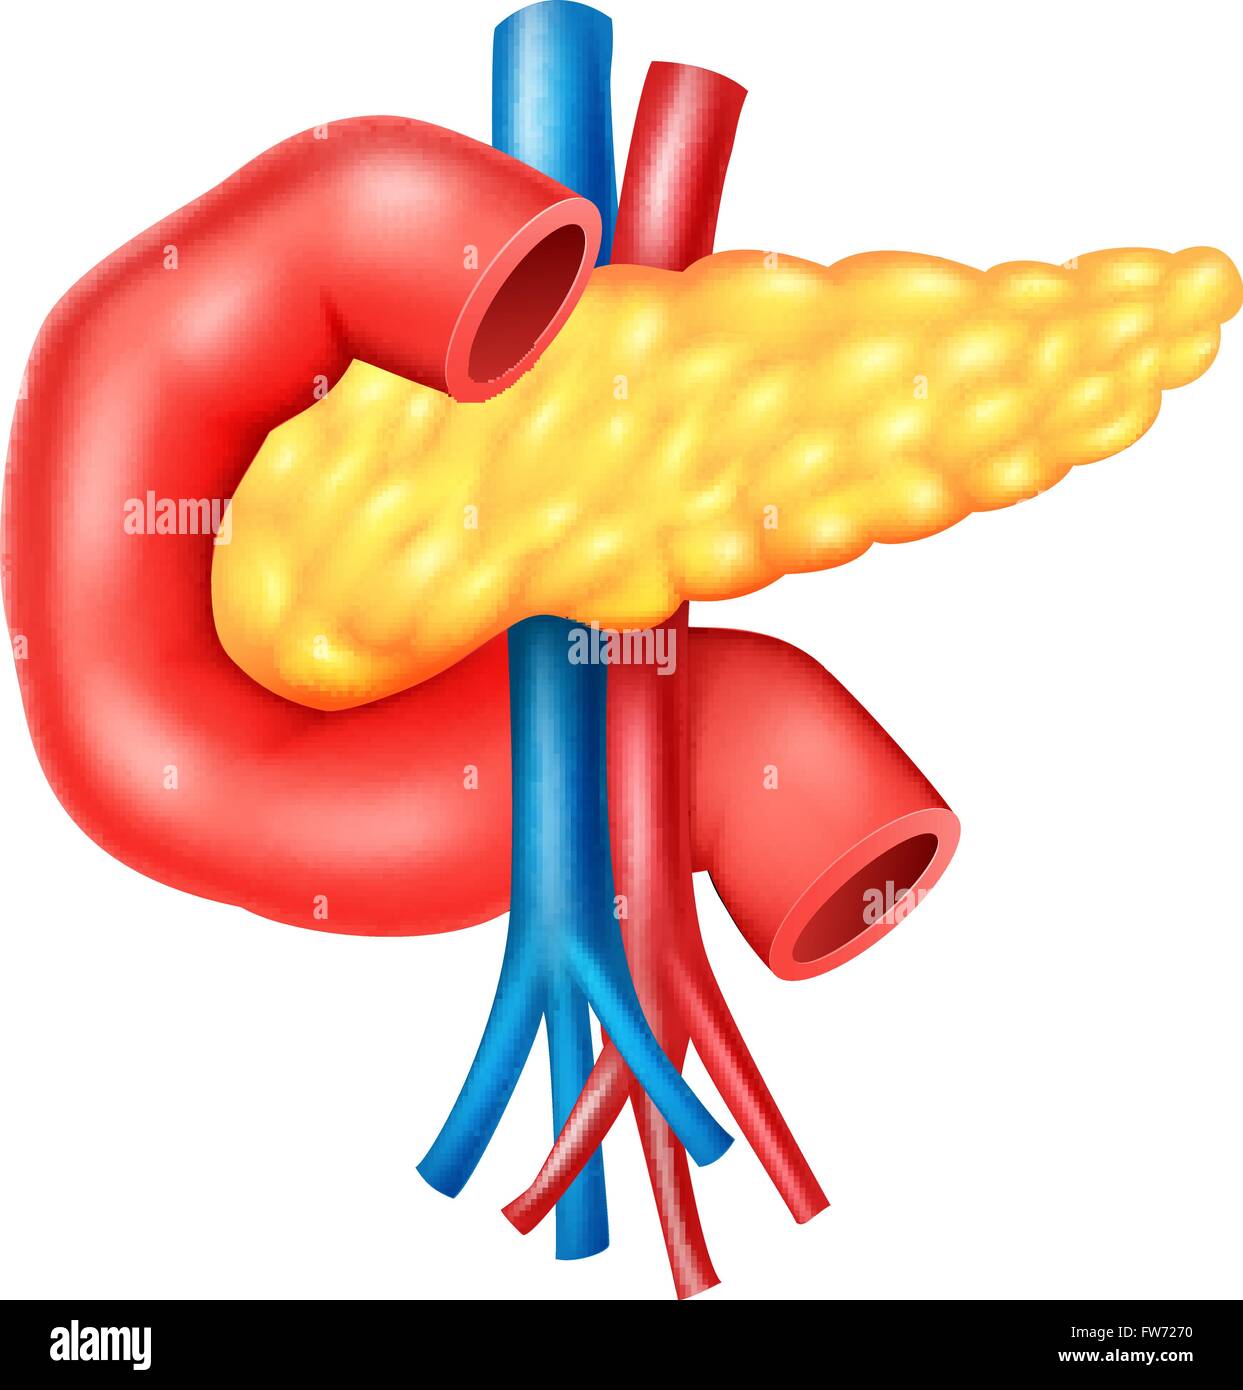 Illustration of Human Internal Pancreas Anatomy Stock Vector Image ...